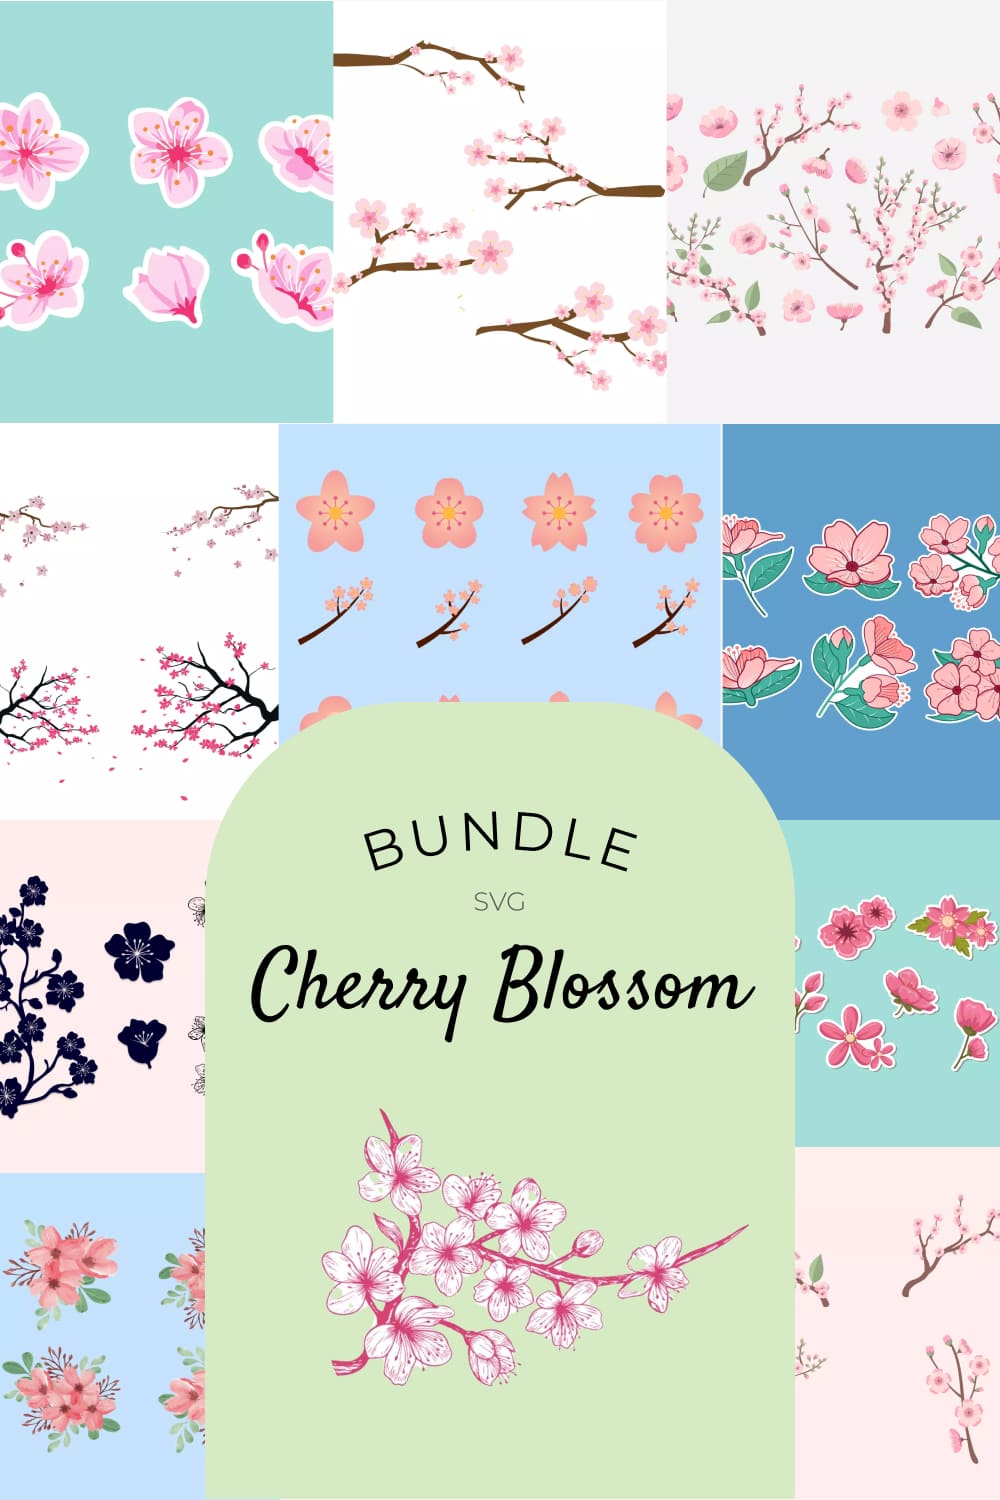 Cherry blossom SVG bundle for Pinterest.